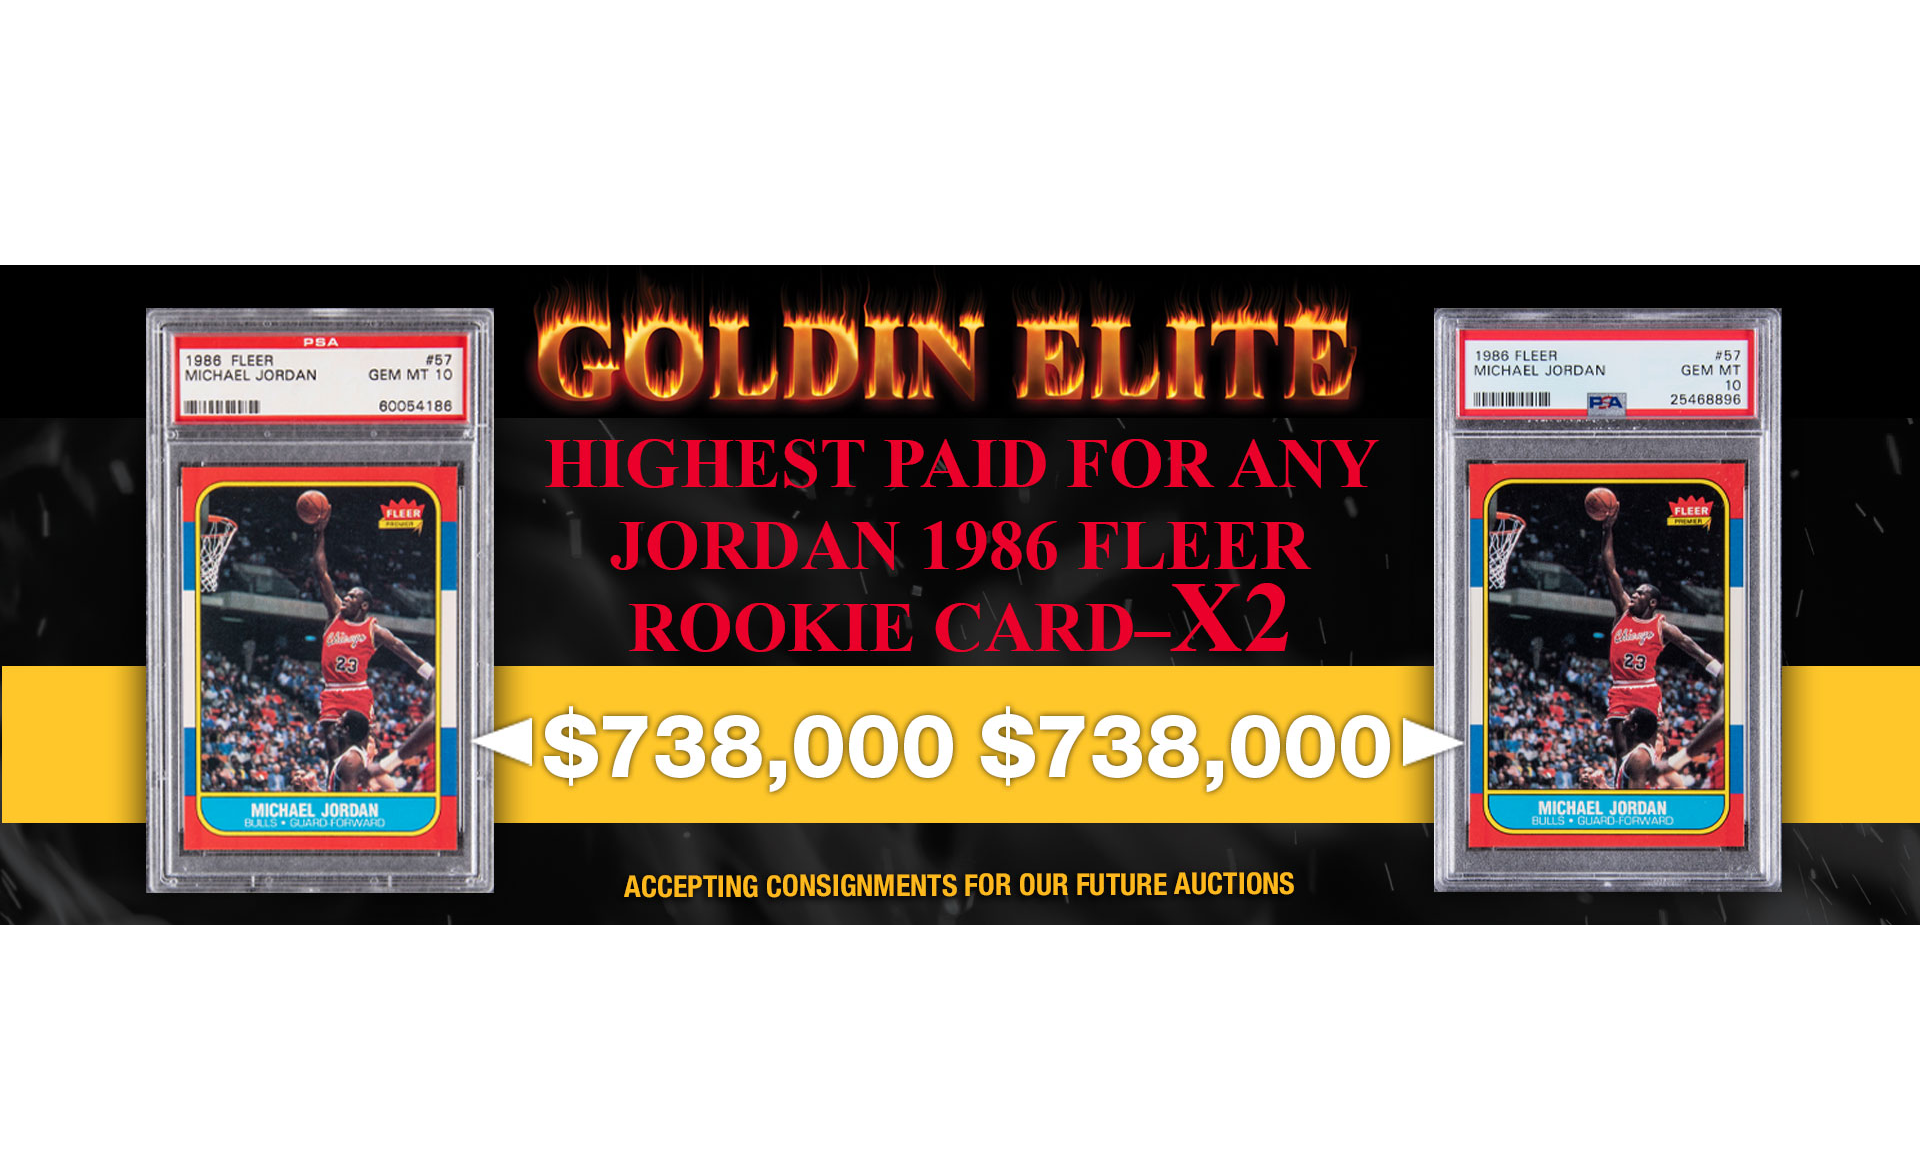 Michael Jordan 新秀球星卡拍出 73.8 万美元天价